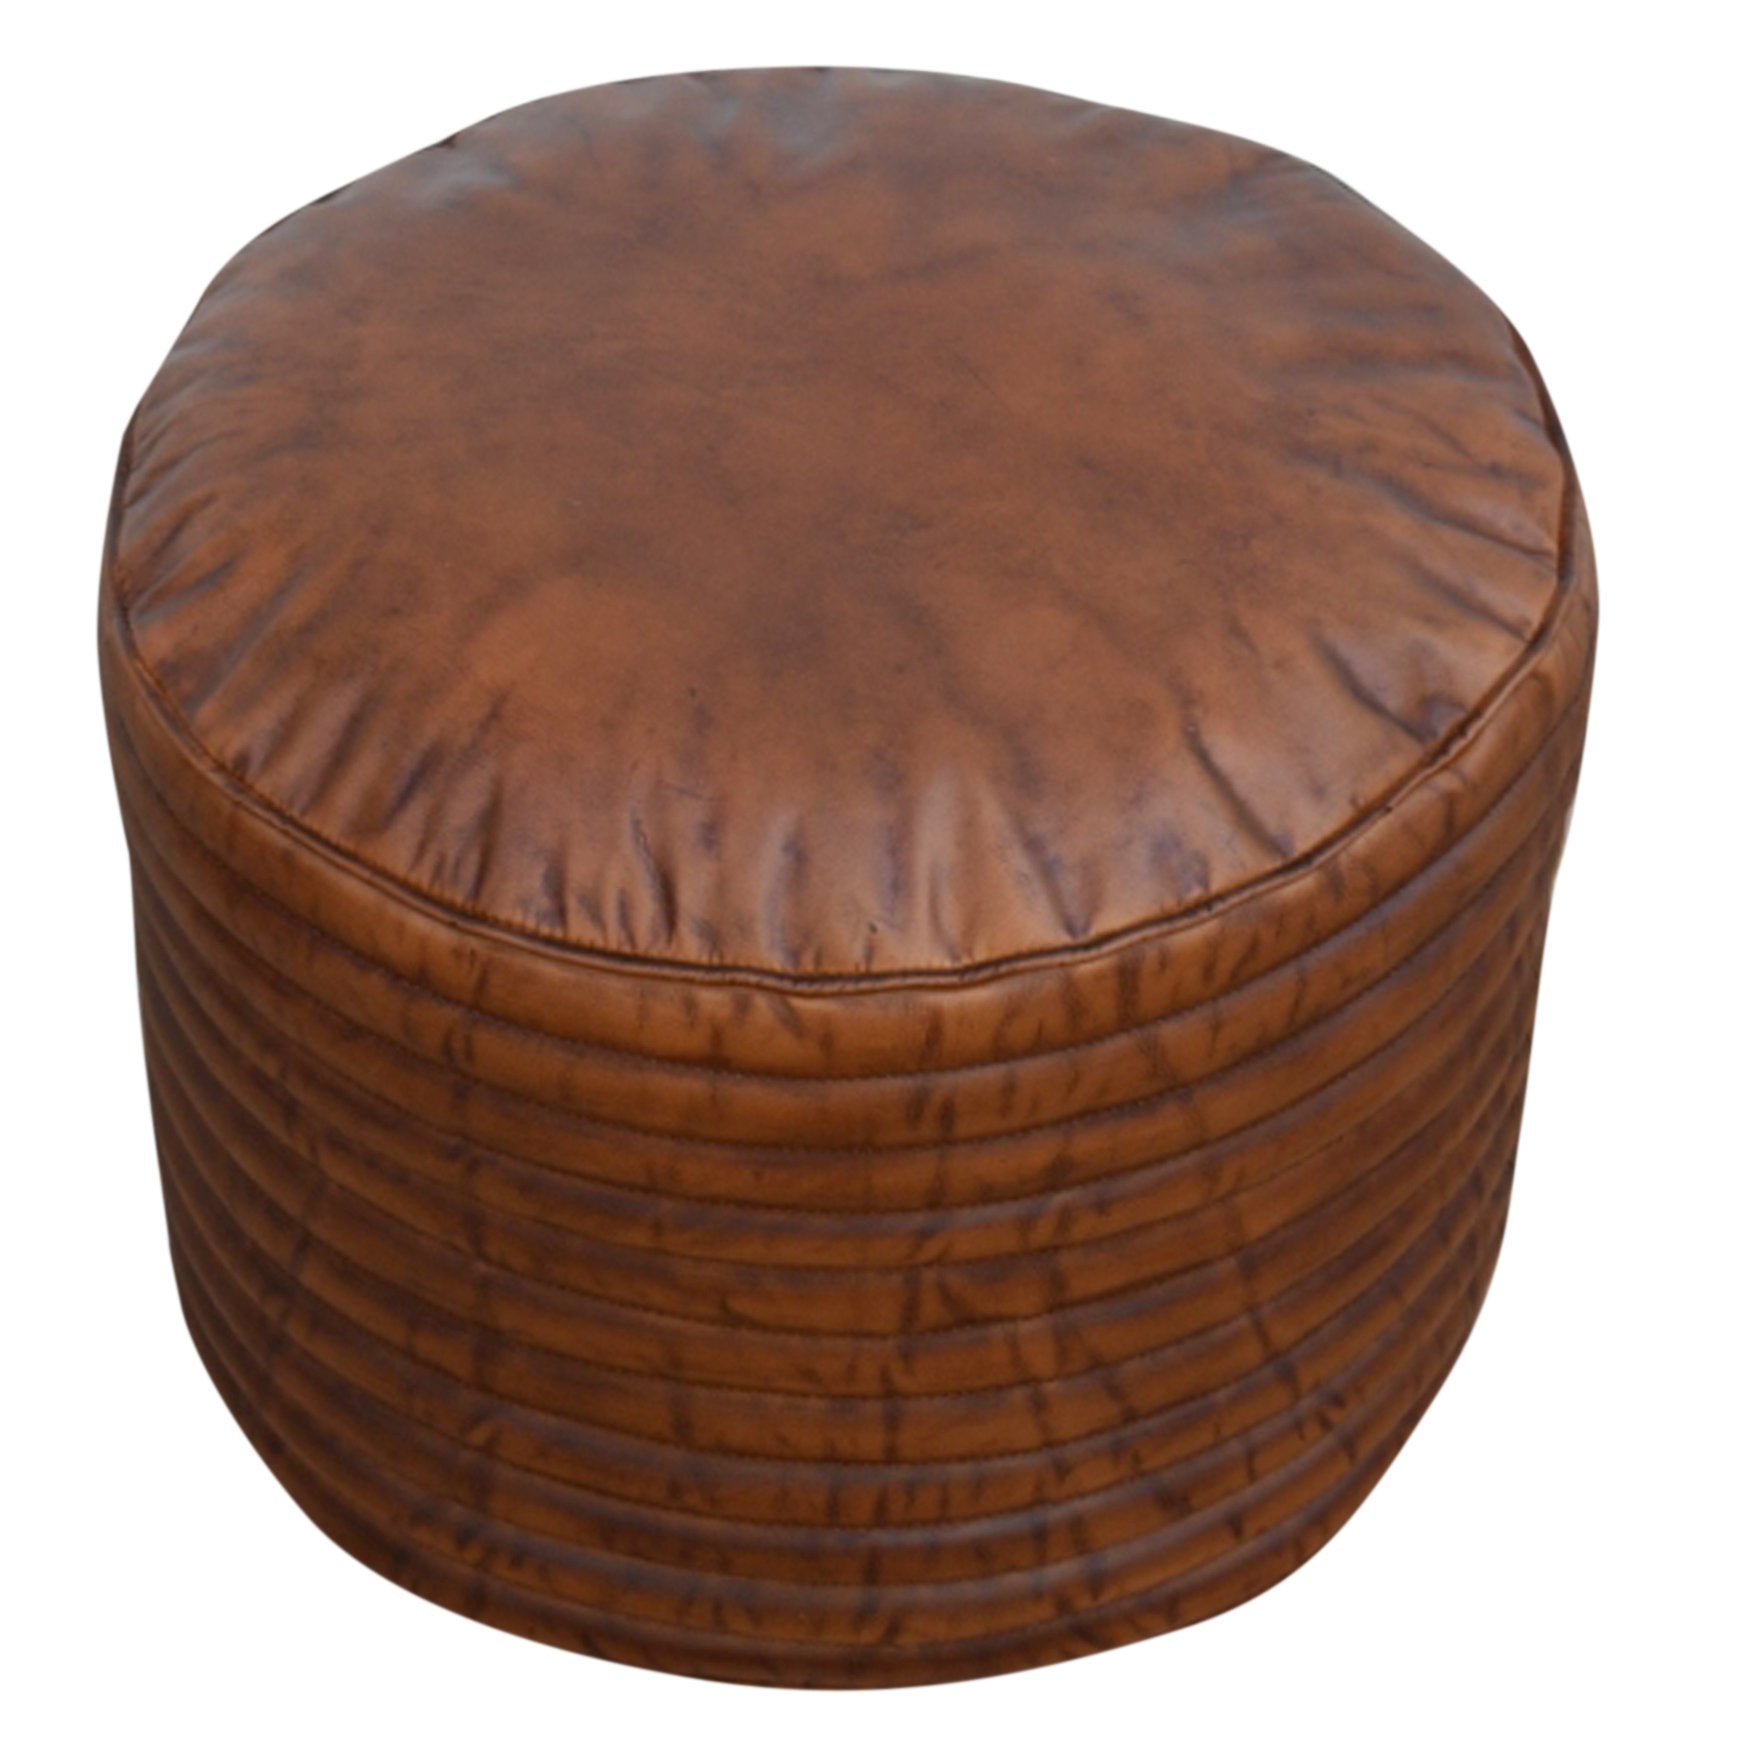 Buff Brown Leather Ottoman - decorstore